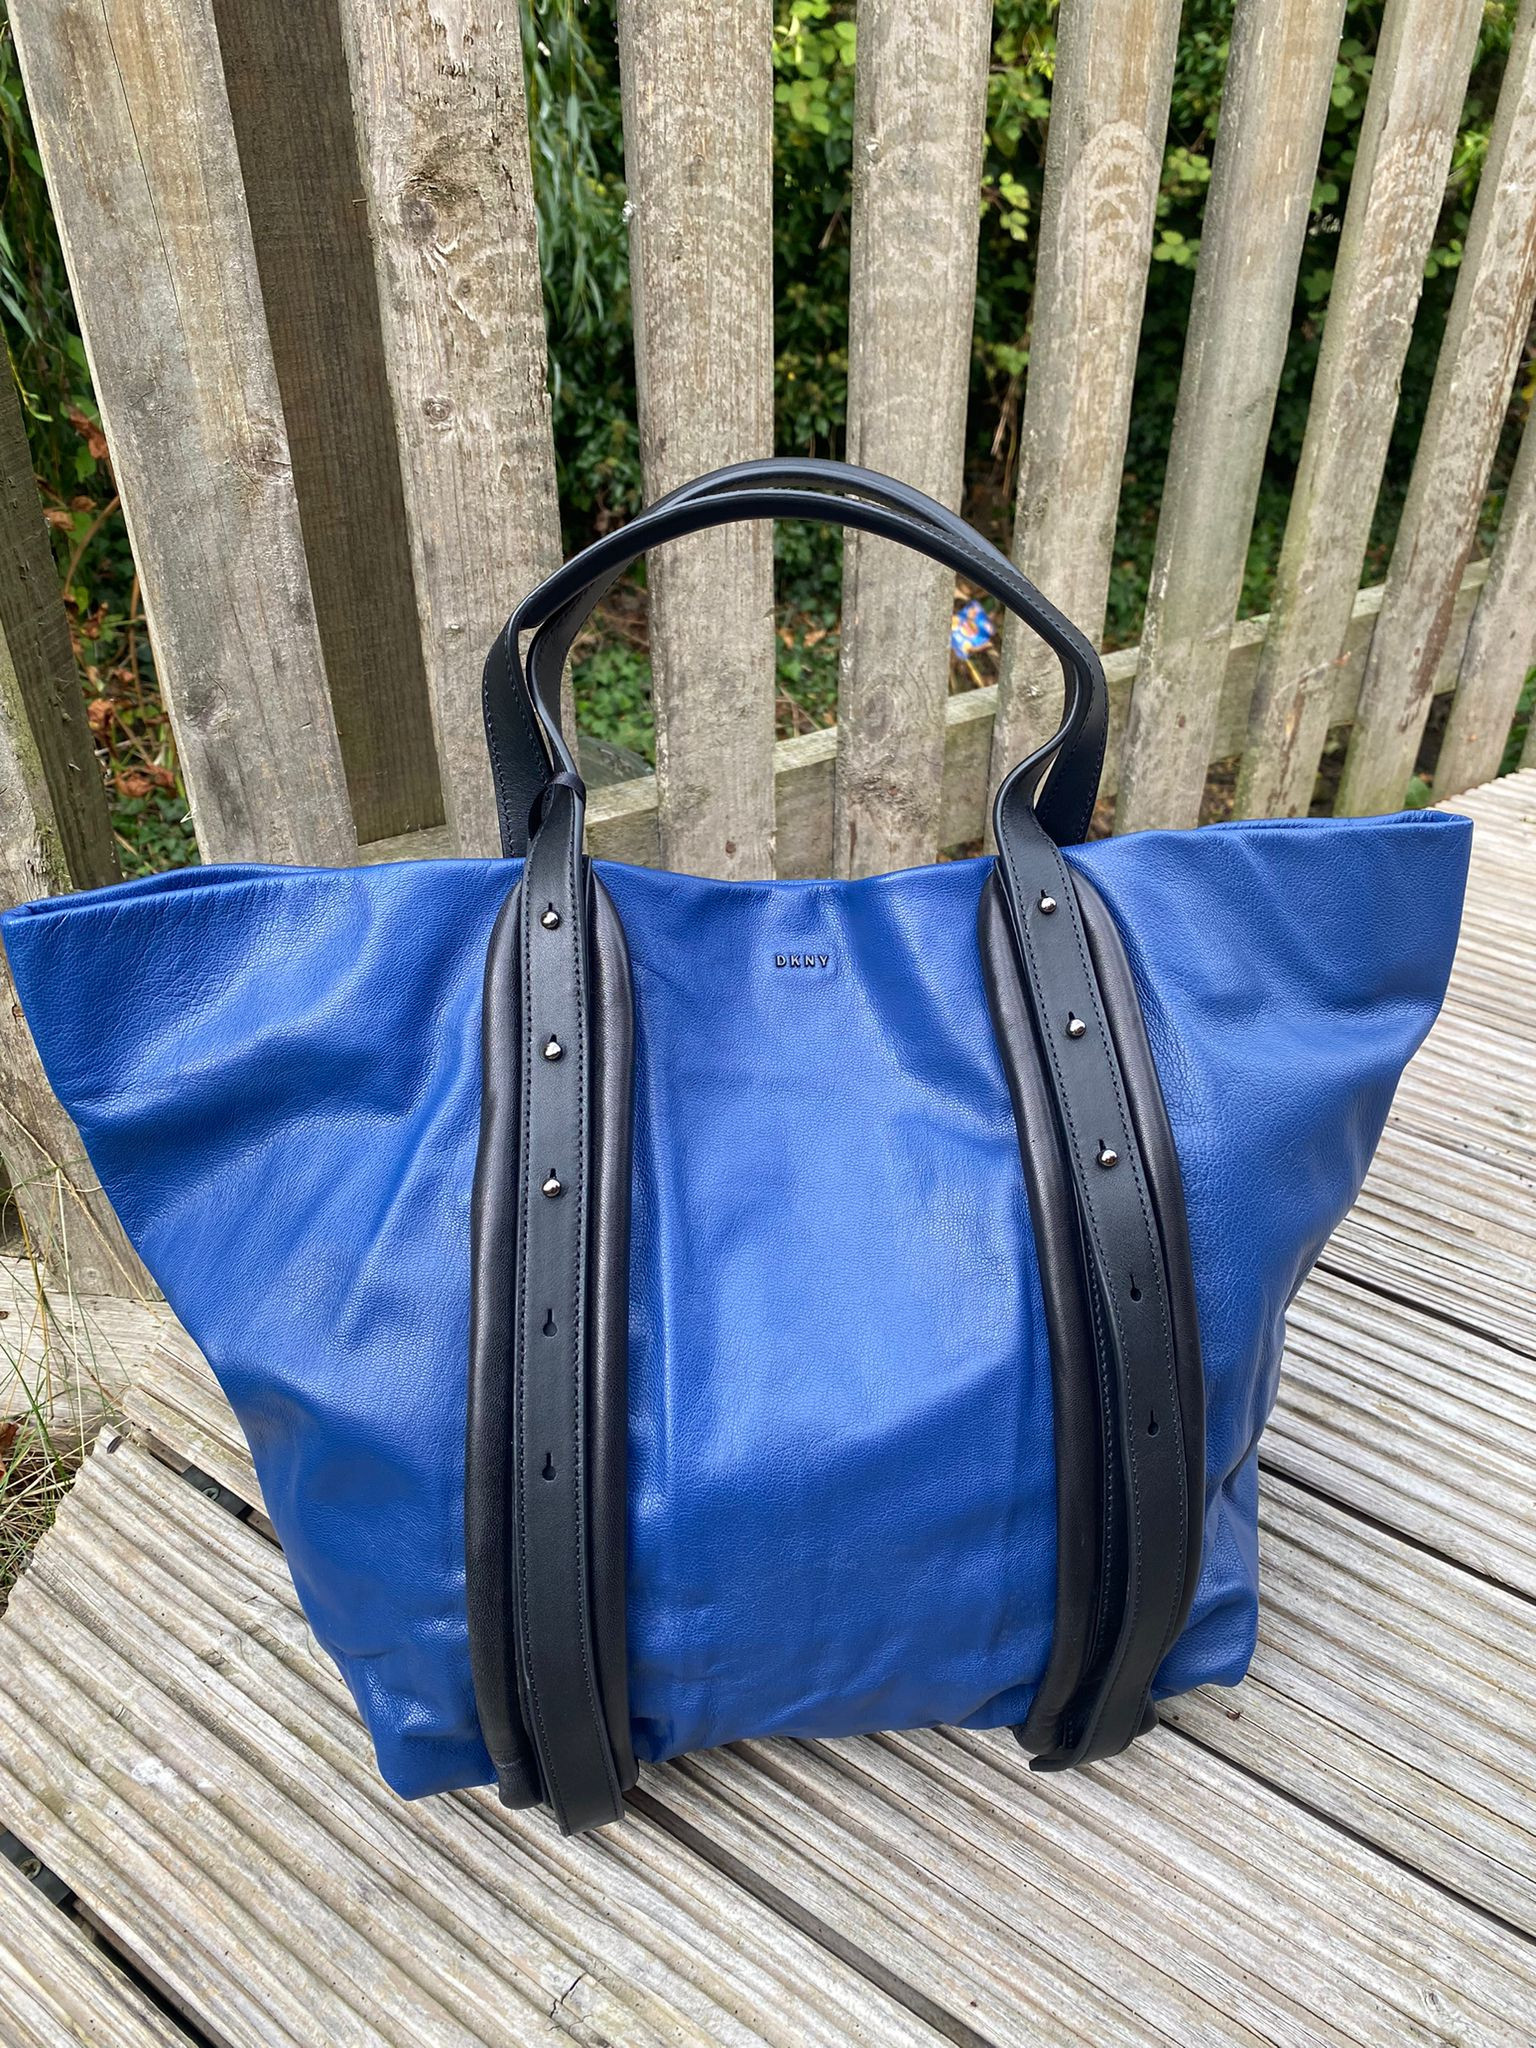 DKNY Saffiano Leather Tote Bag Blue Black Size L